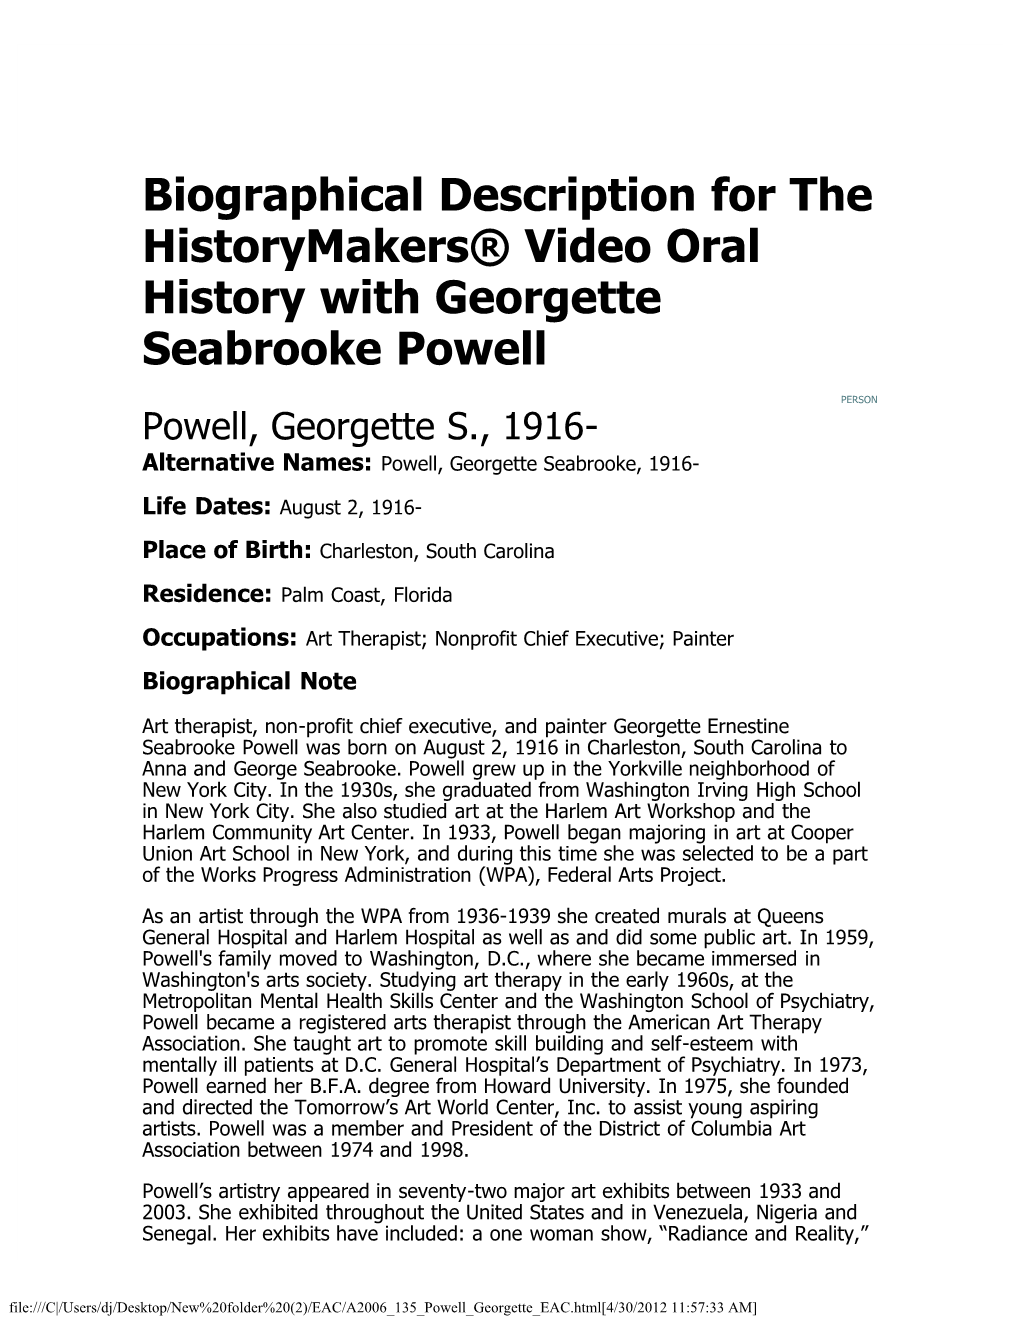 Powell, Georgette S., 1916- Alternative Names: Powell, Georgette Seabrooke, 1916